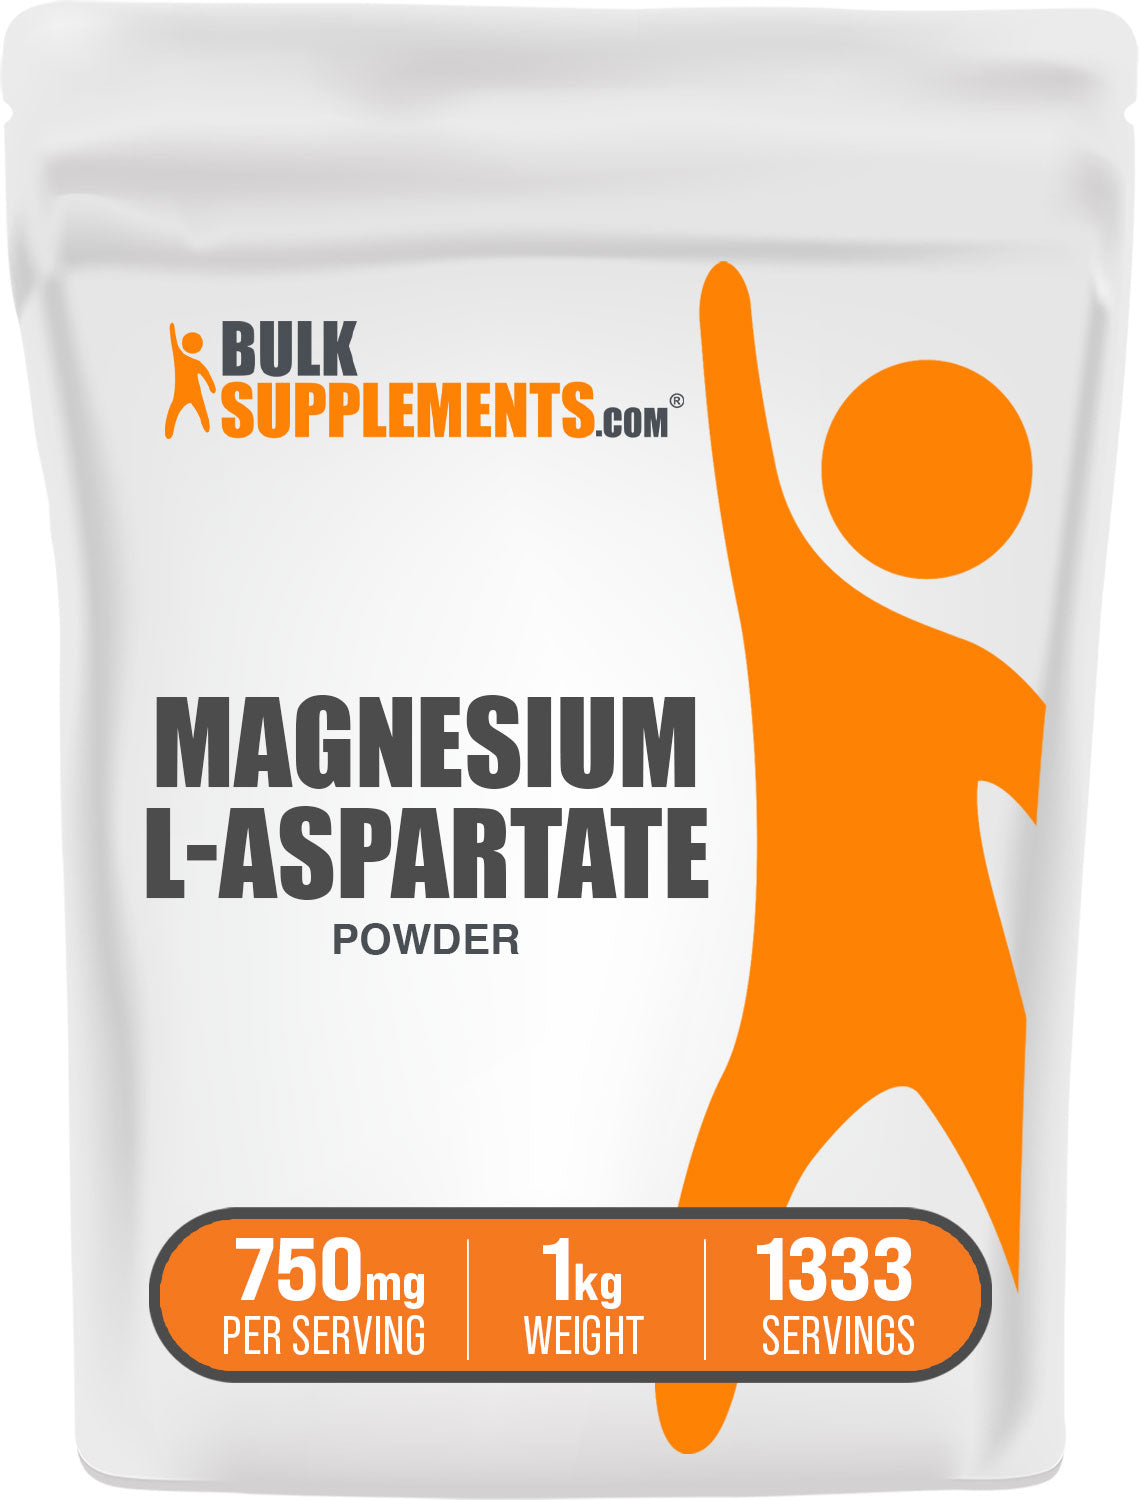 BulkSupplements Magnesium L-Aspartate Powder 1kg bag